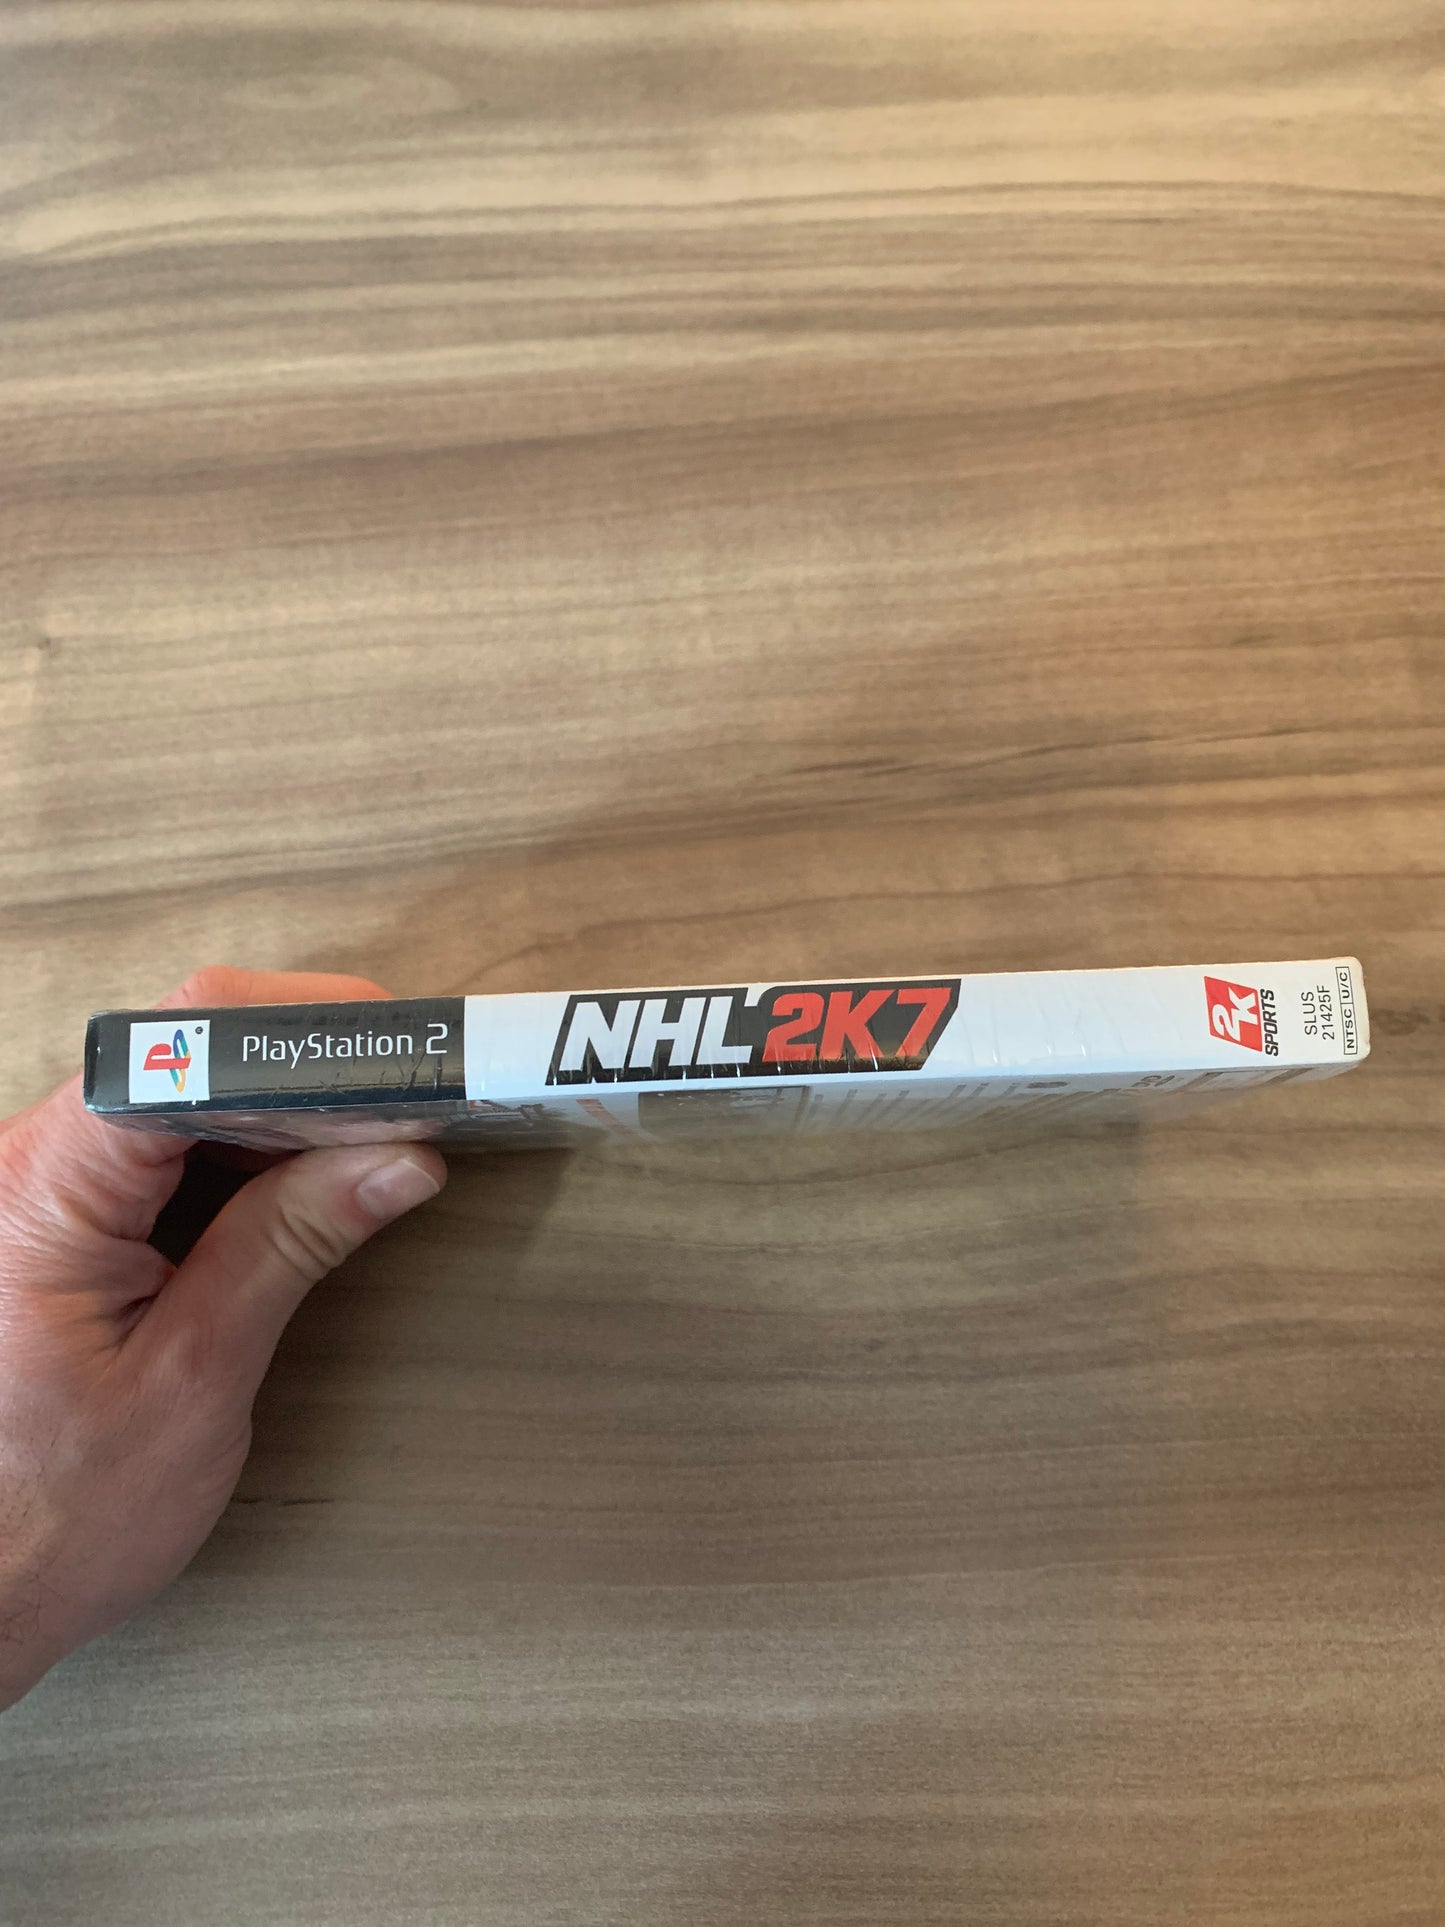 SONY PLAYSTATiON 2 [PS2] | NHL 2K7